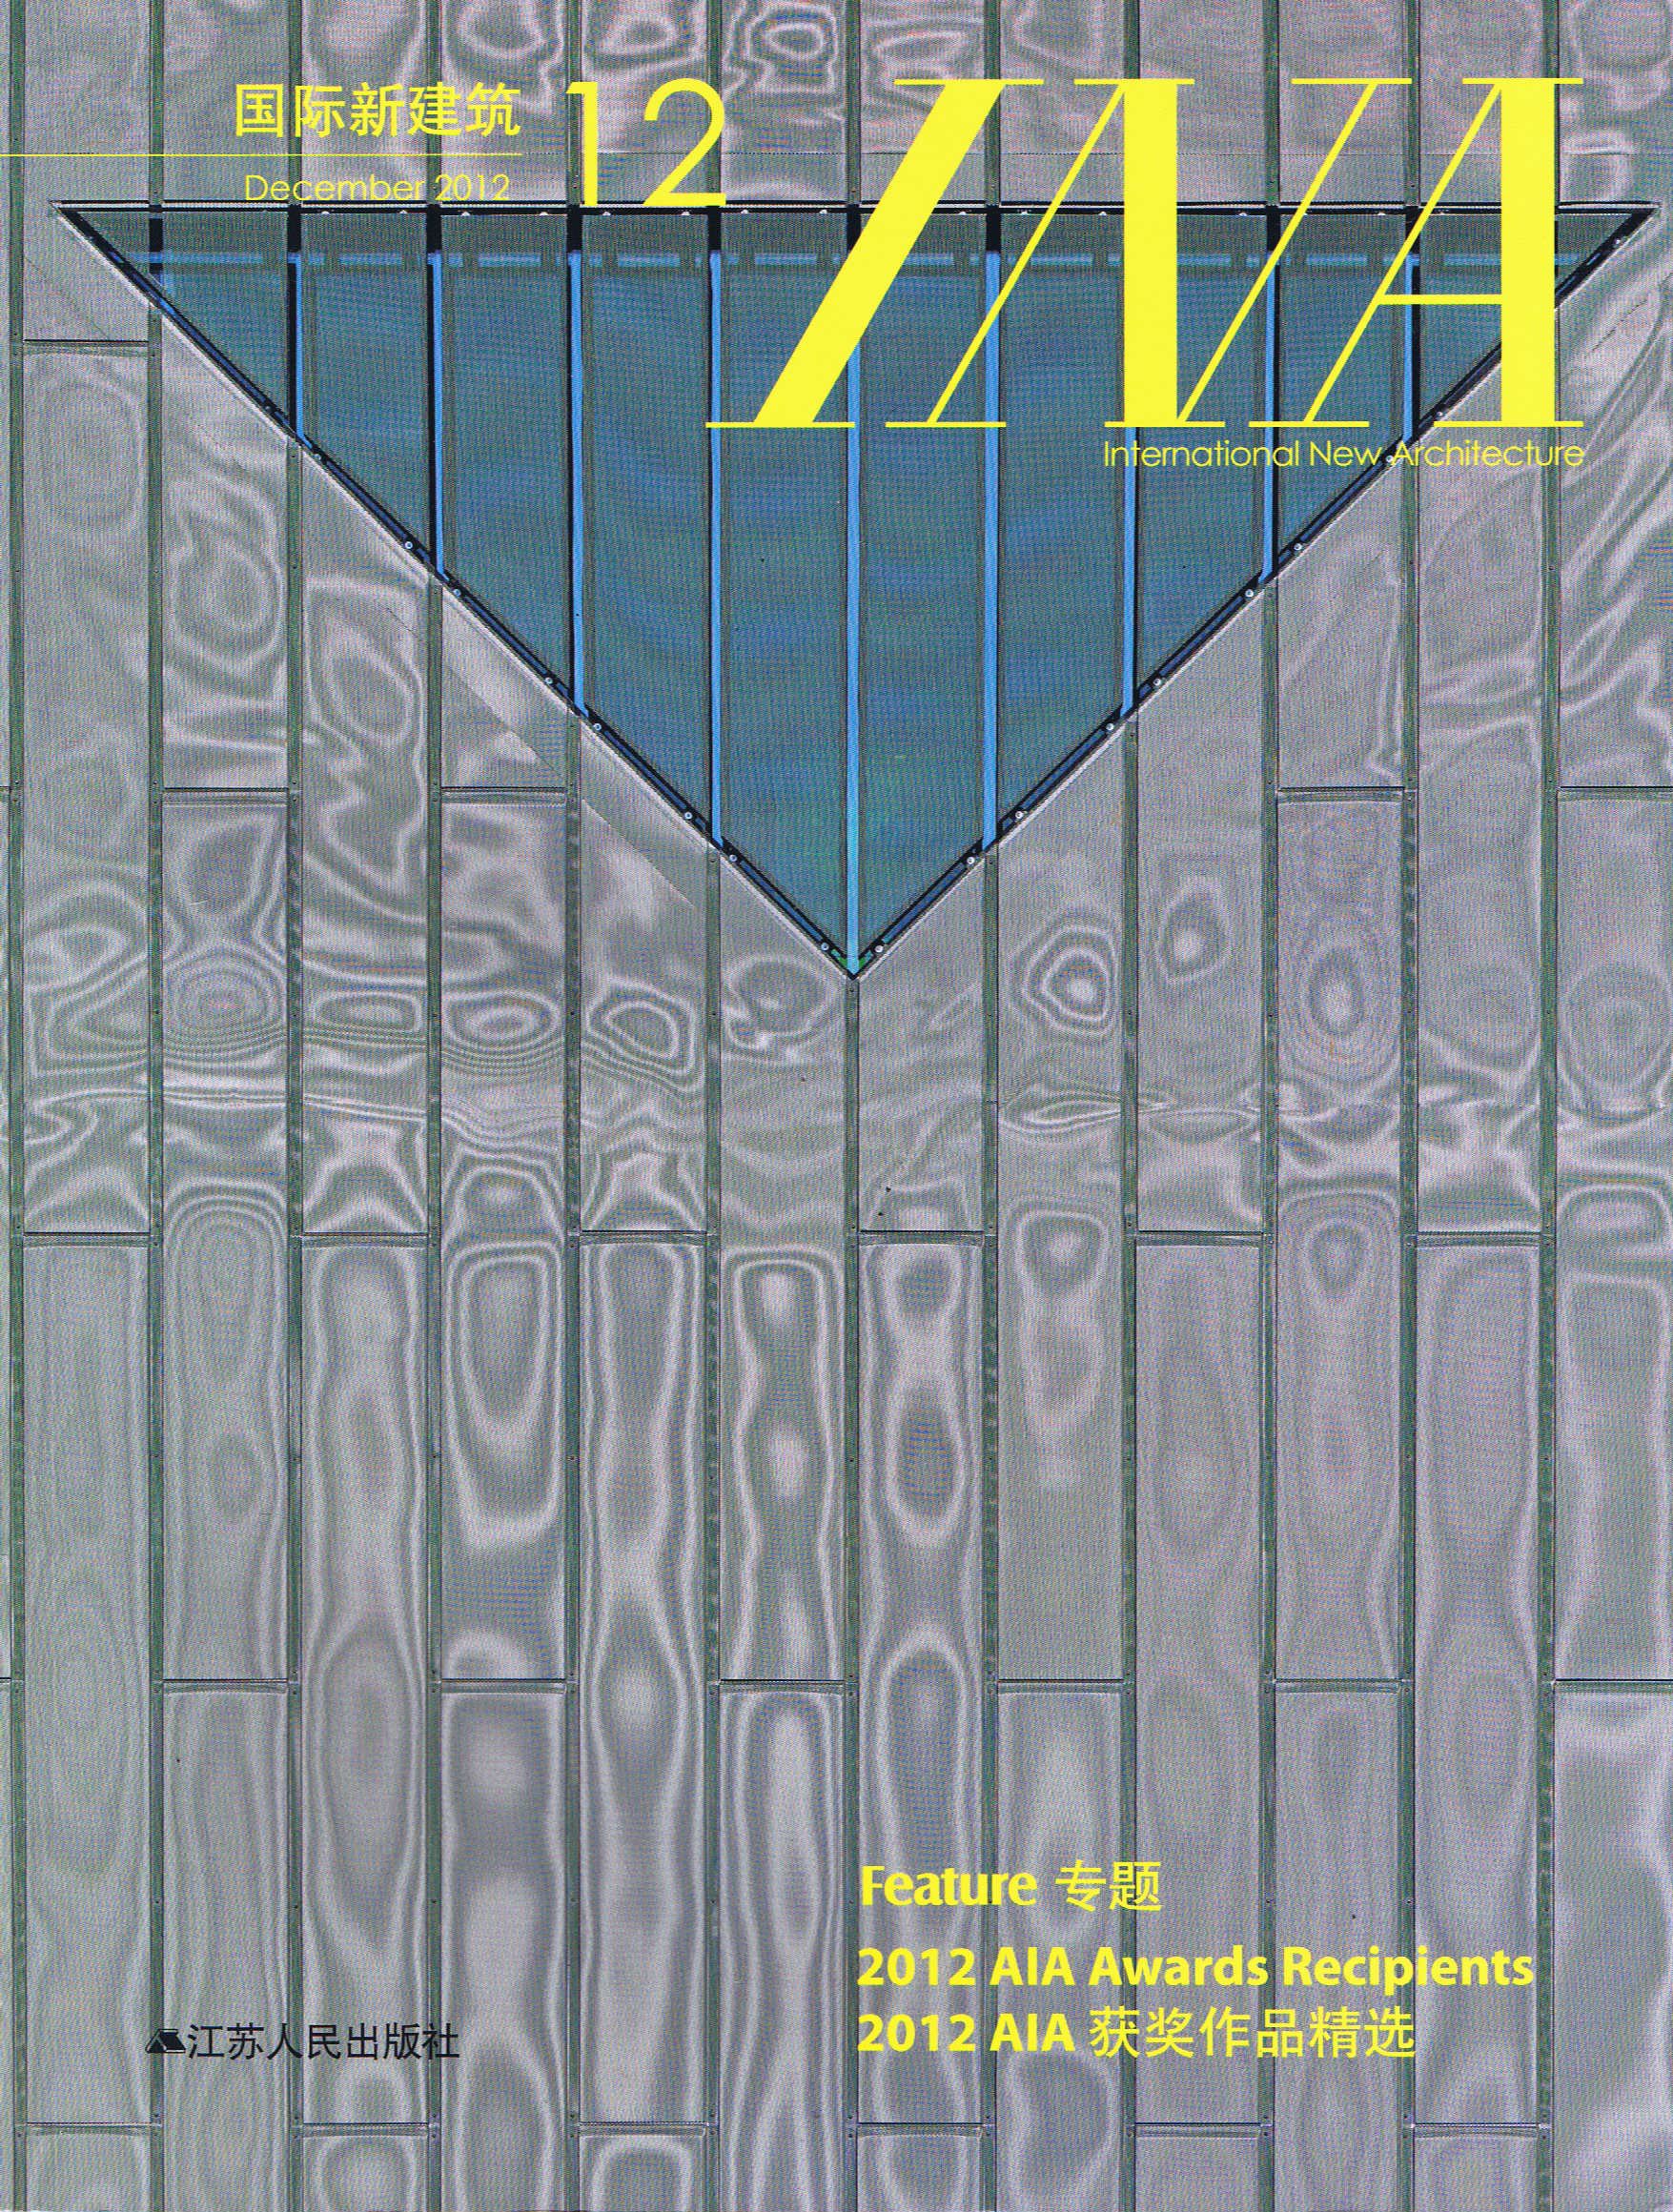 2012 Dec - International New Architecture Cover.JPG